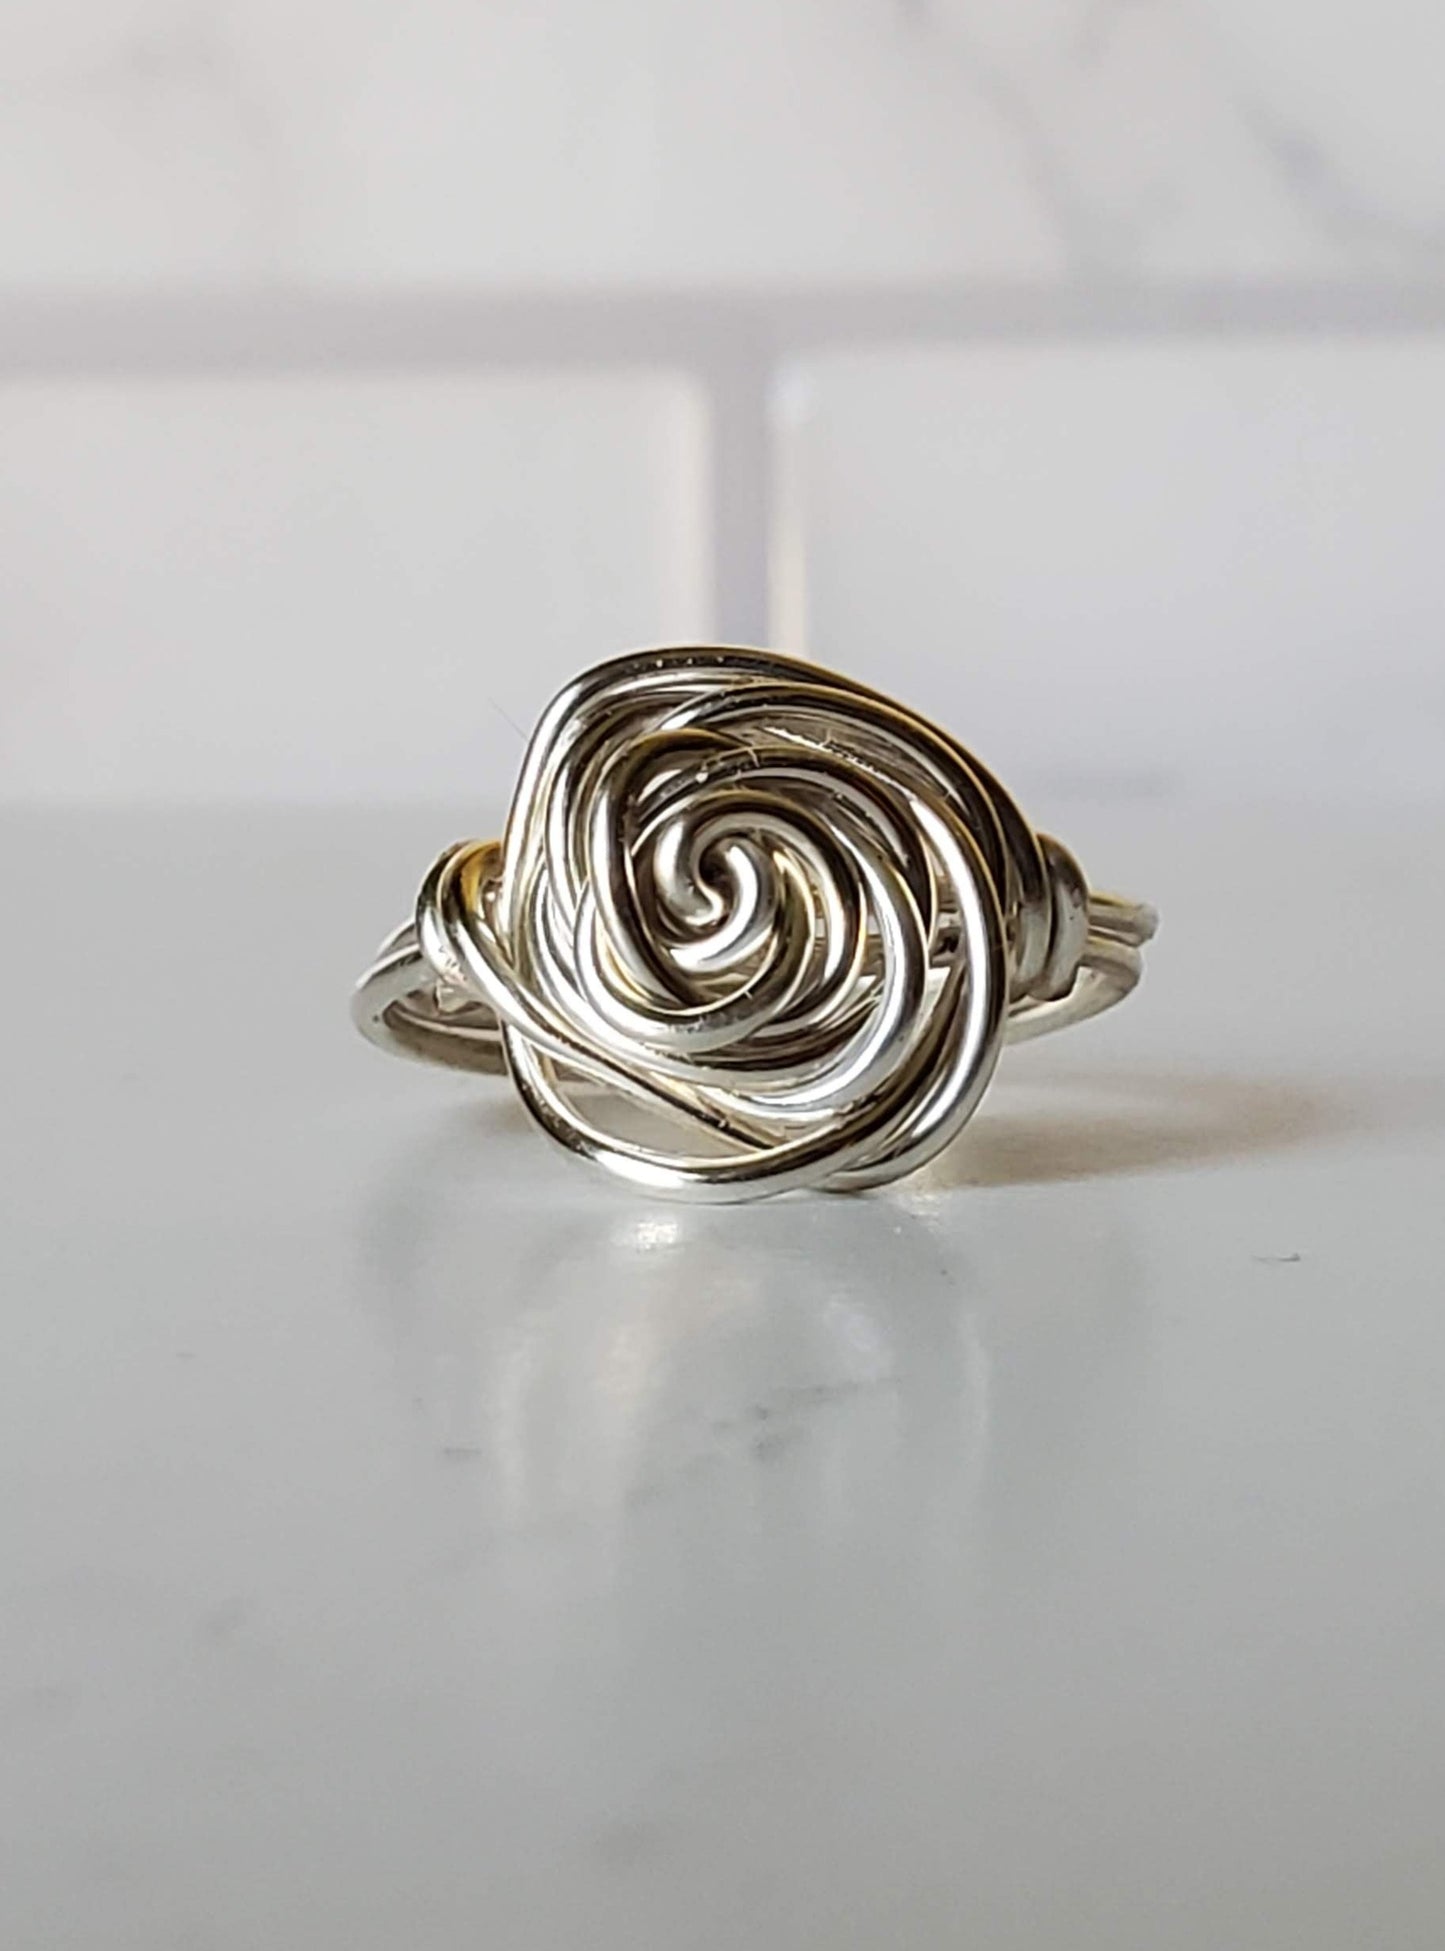 Silver rose ring